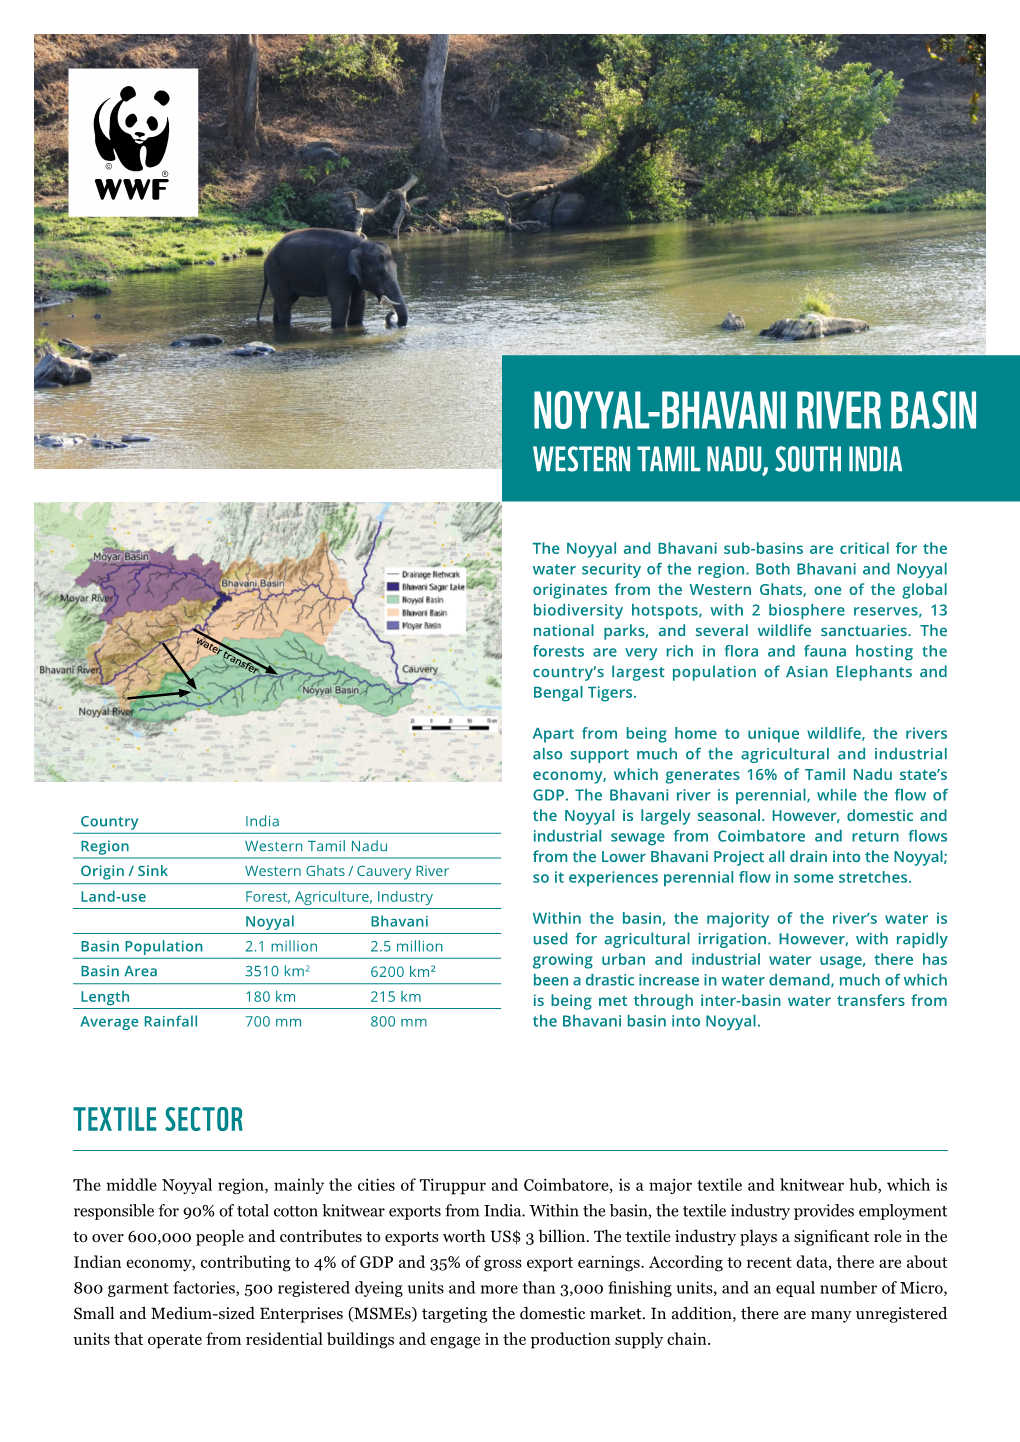 Noyyal-Bhavani River Basin Western Tamil Nadu, South India